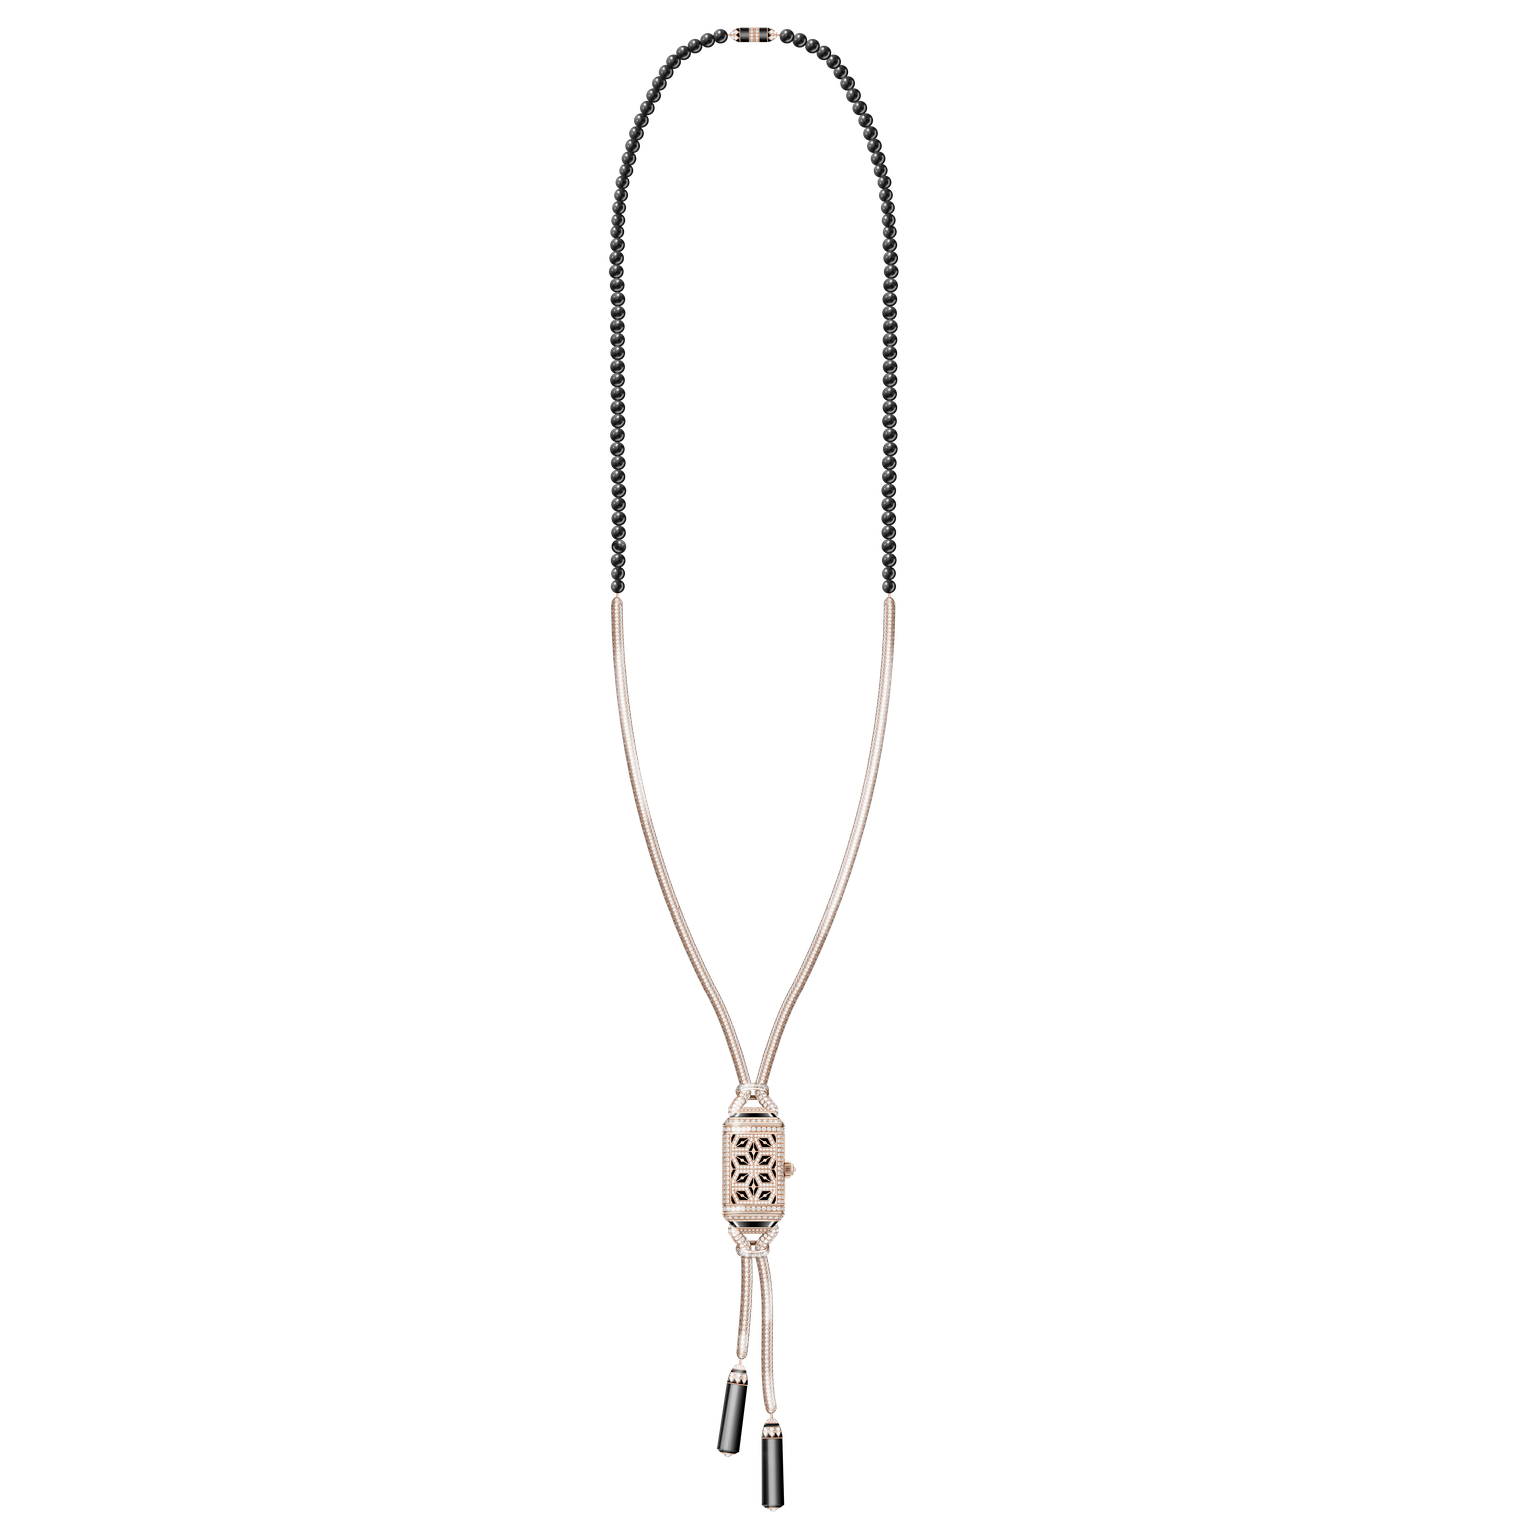 The Reverso Secret necklace by Jaeger-LeCoultre 2